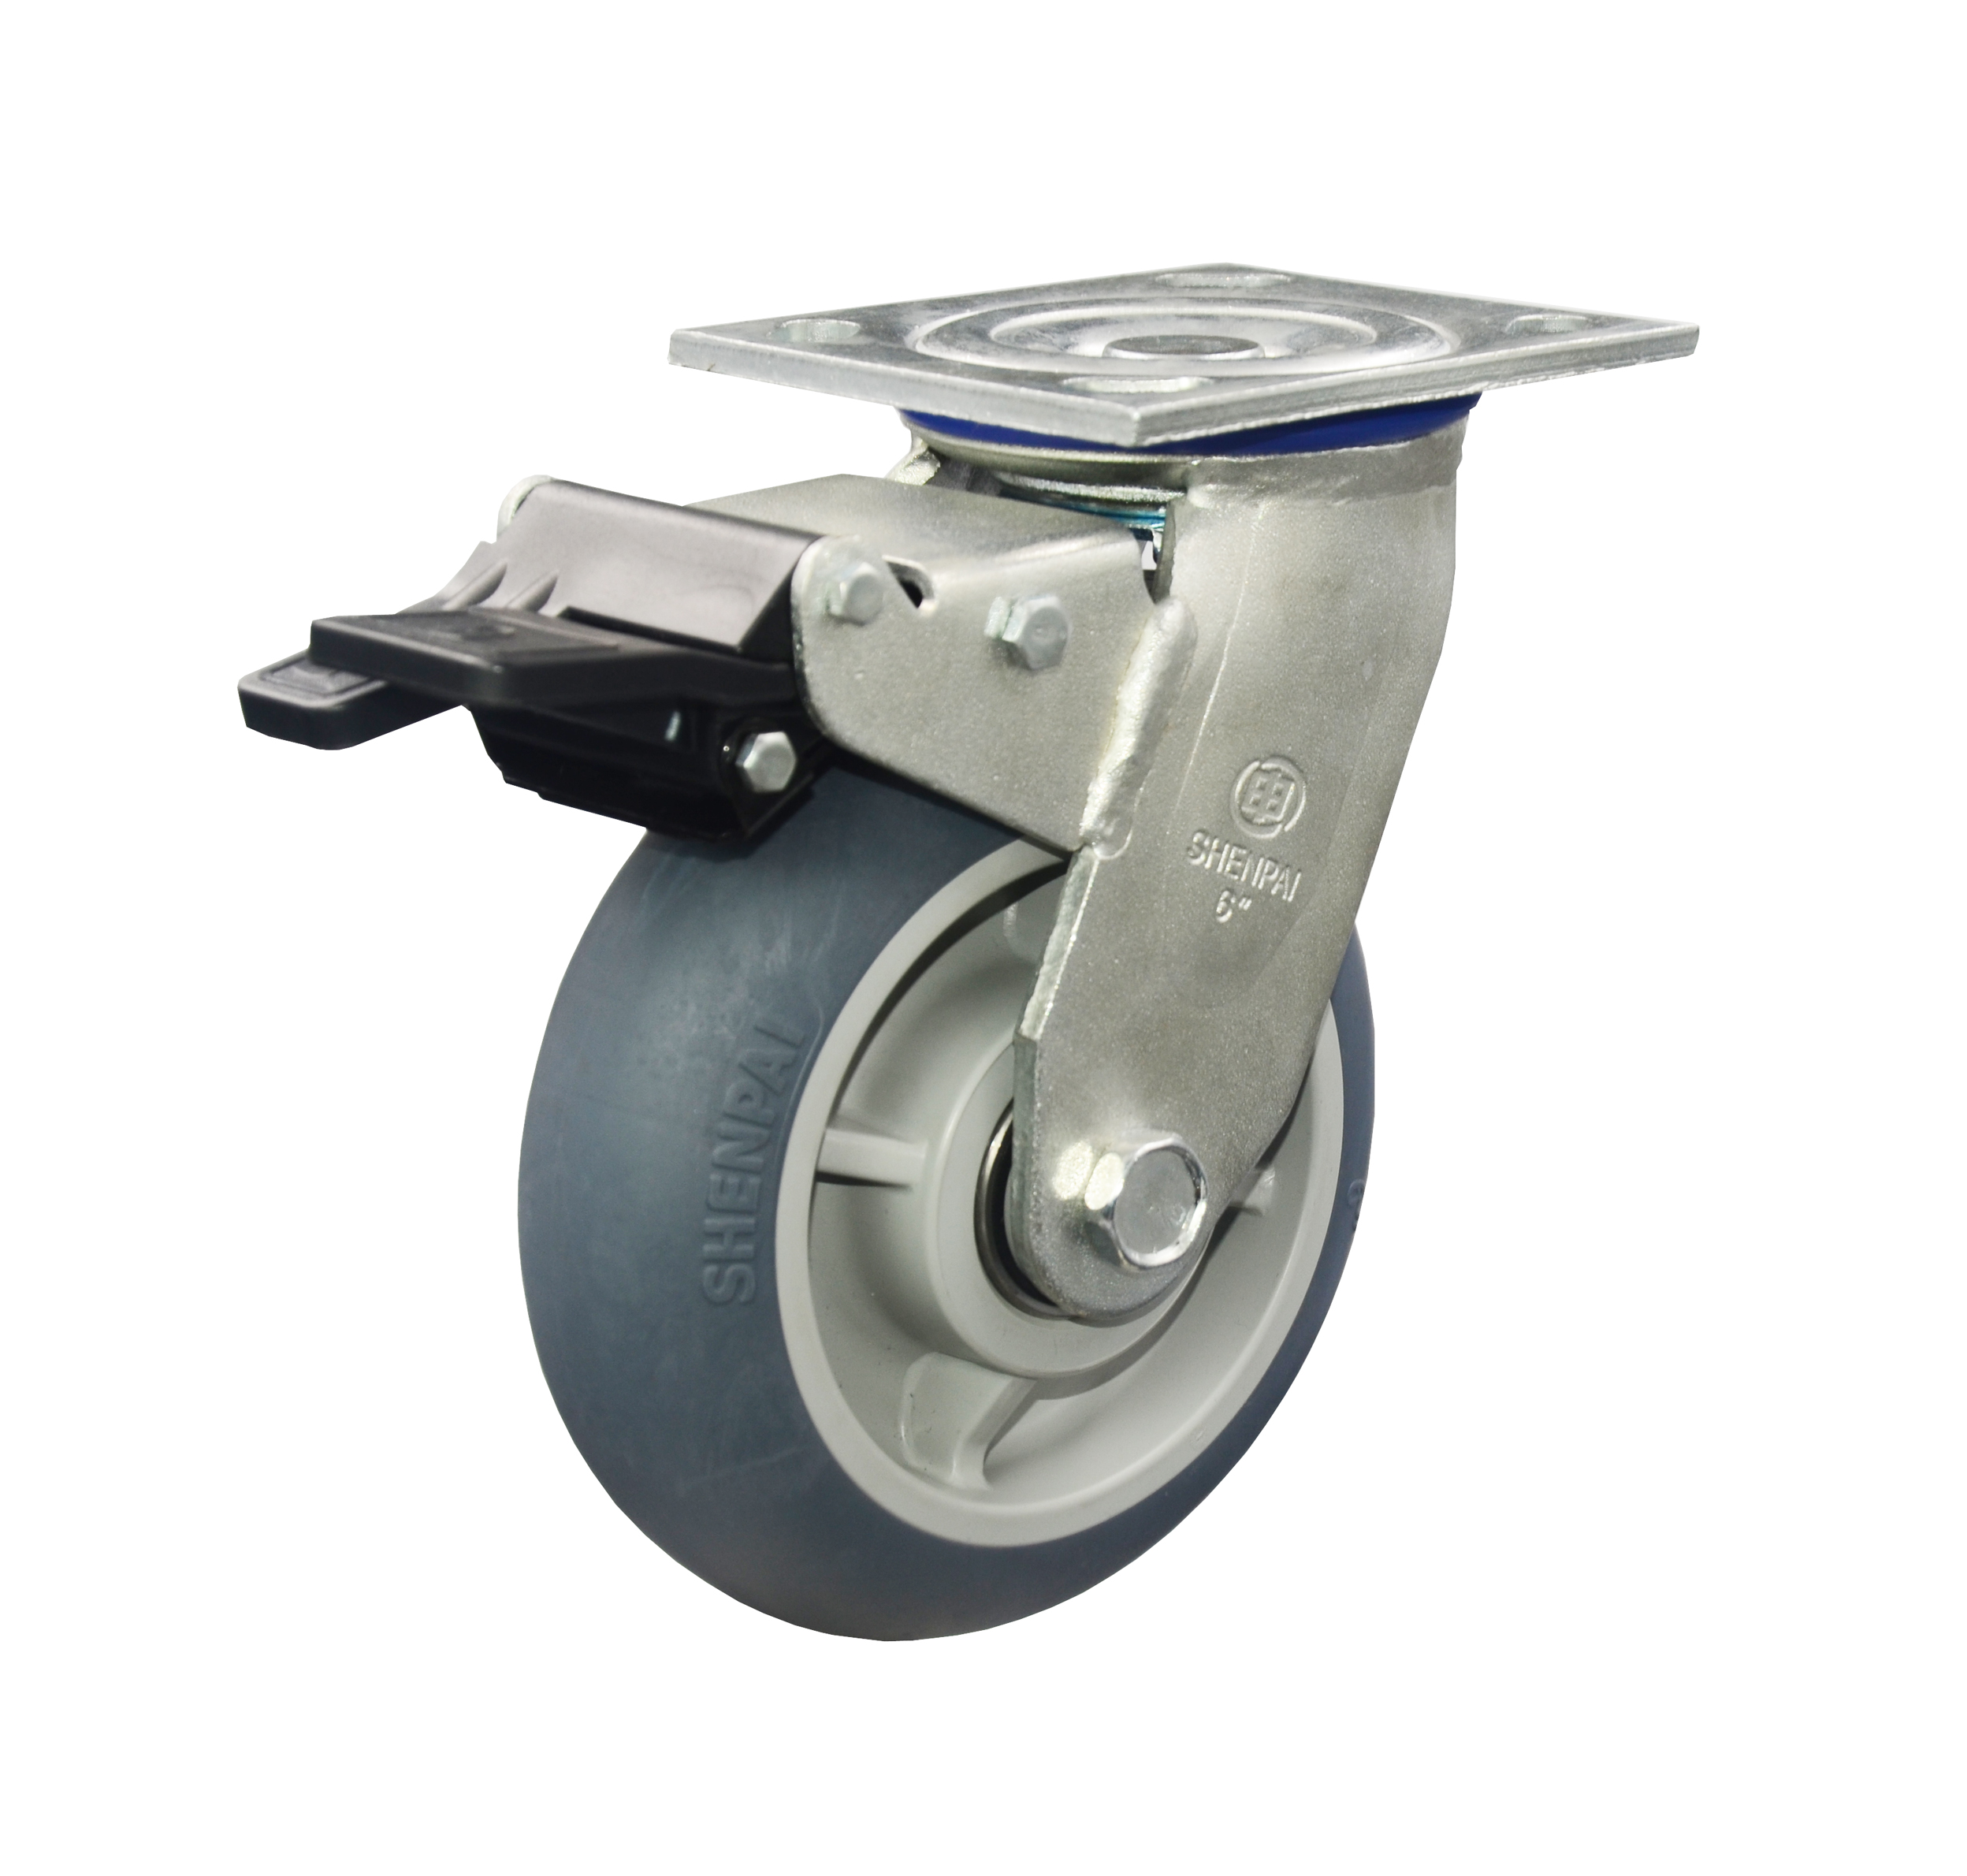 TPR Swivel with brake Caster Wheel for Heavy Duty 6"